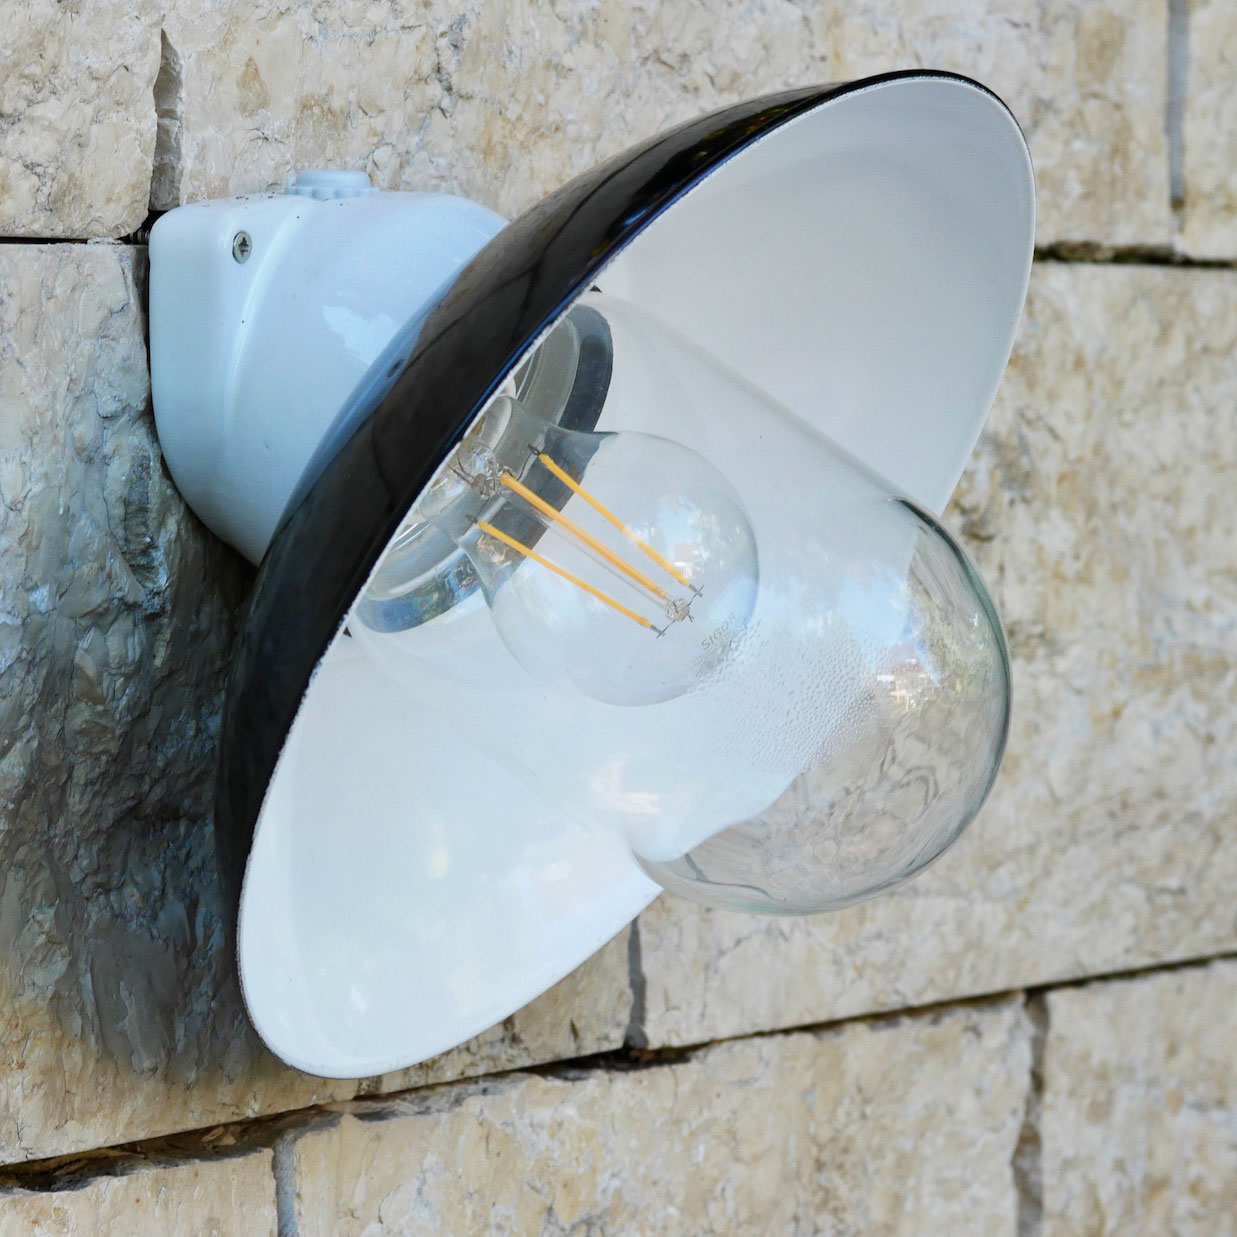 Wall Light with Porcelain Base and Reflector WMAL 2010: Porzellansockel-Wandleuchte WMAL 2010 mit klarem Zylinderglas